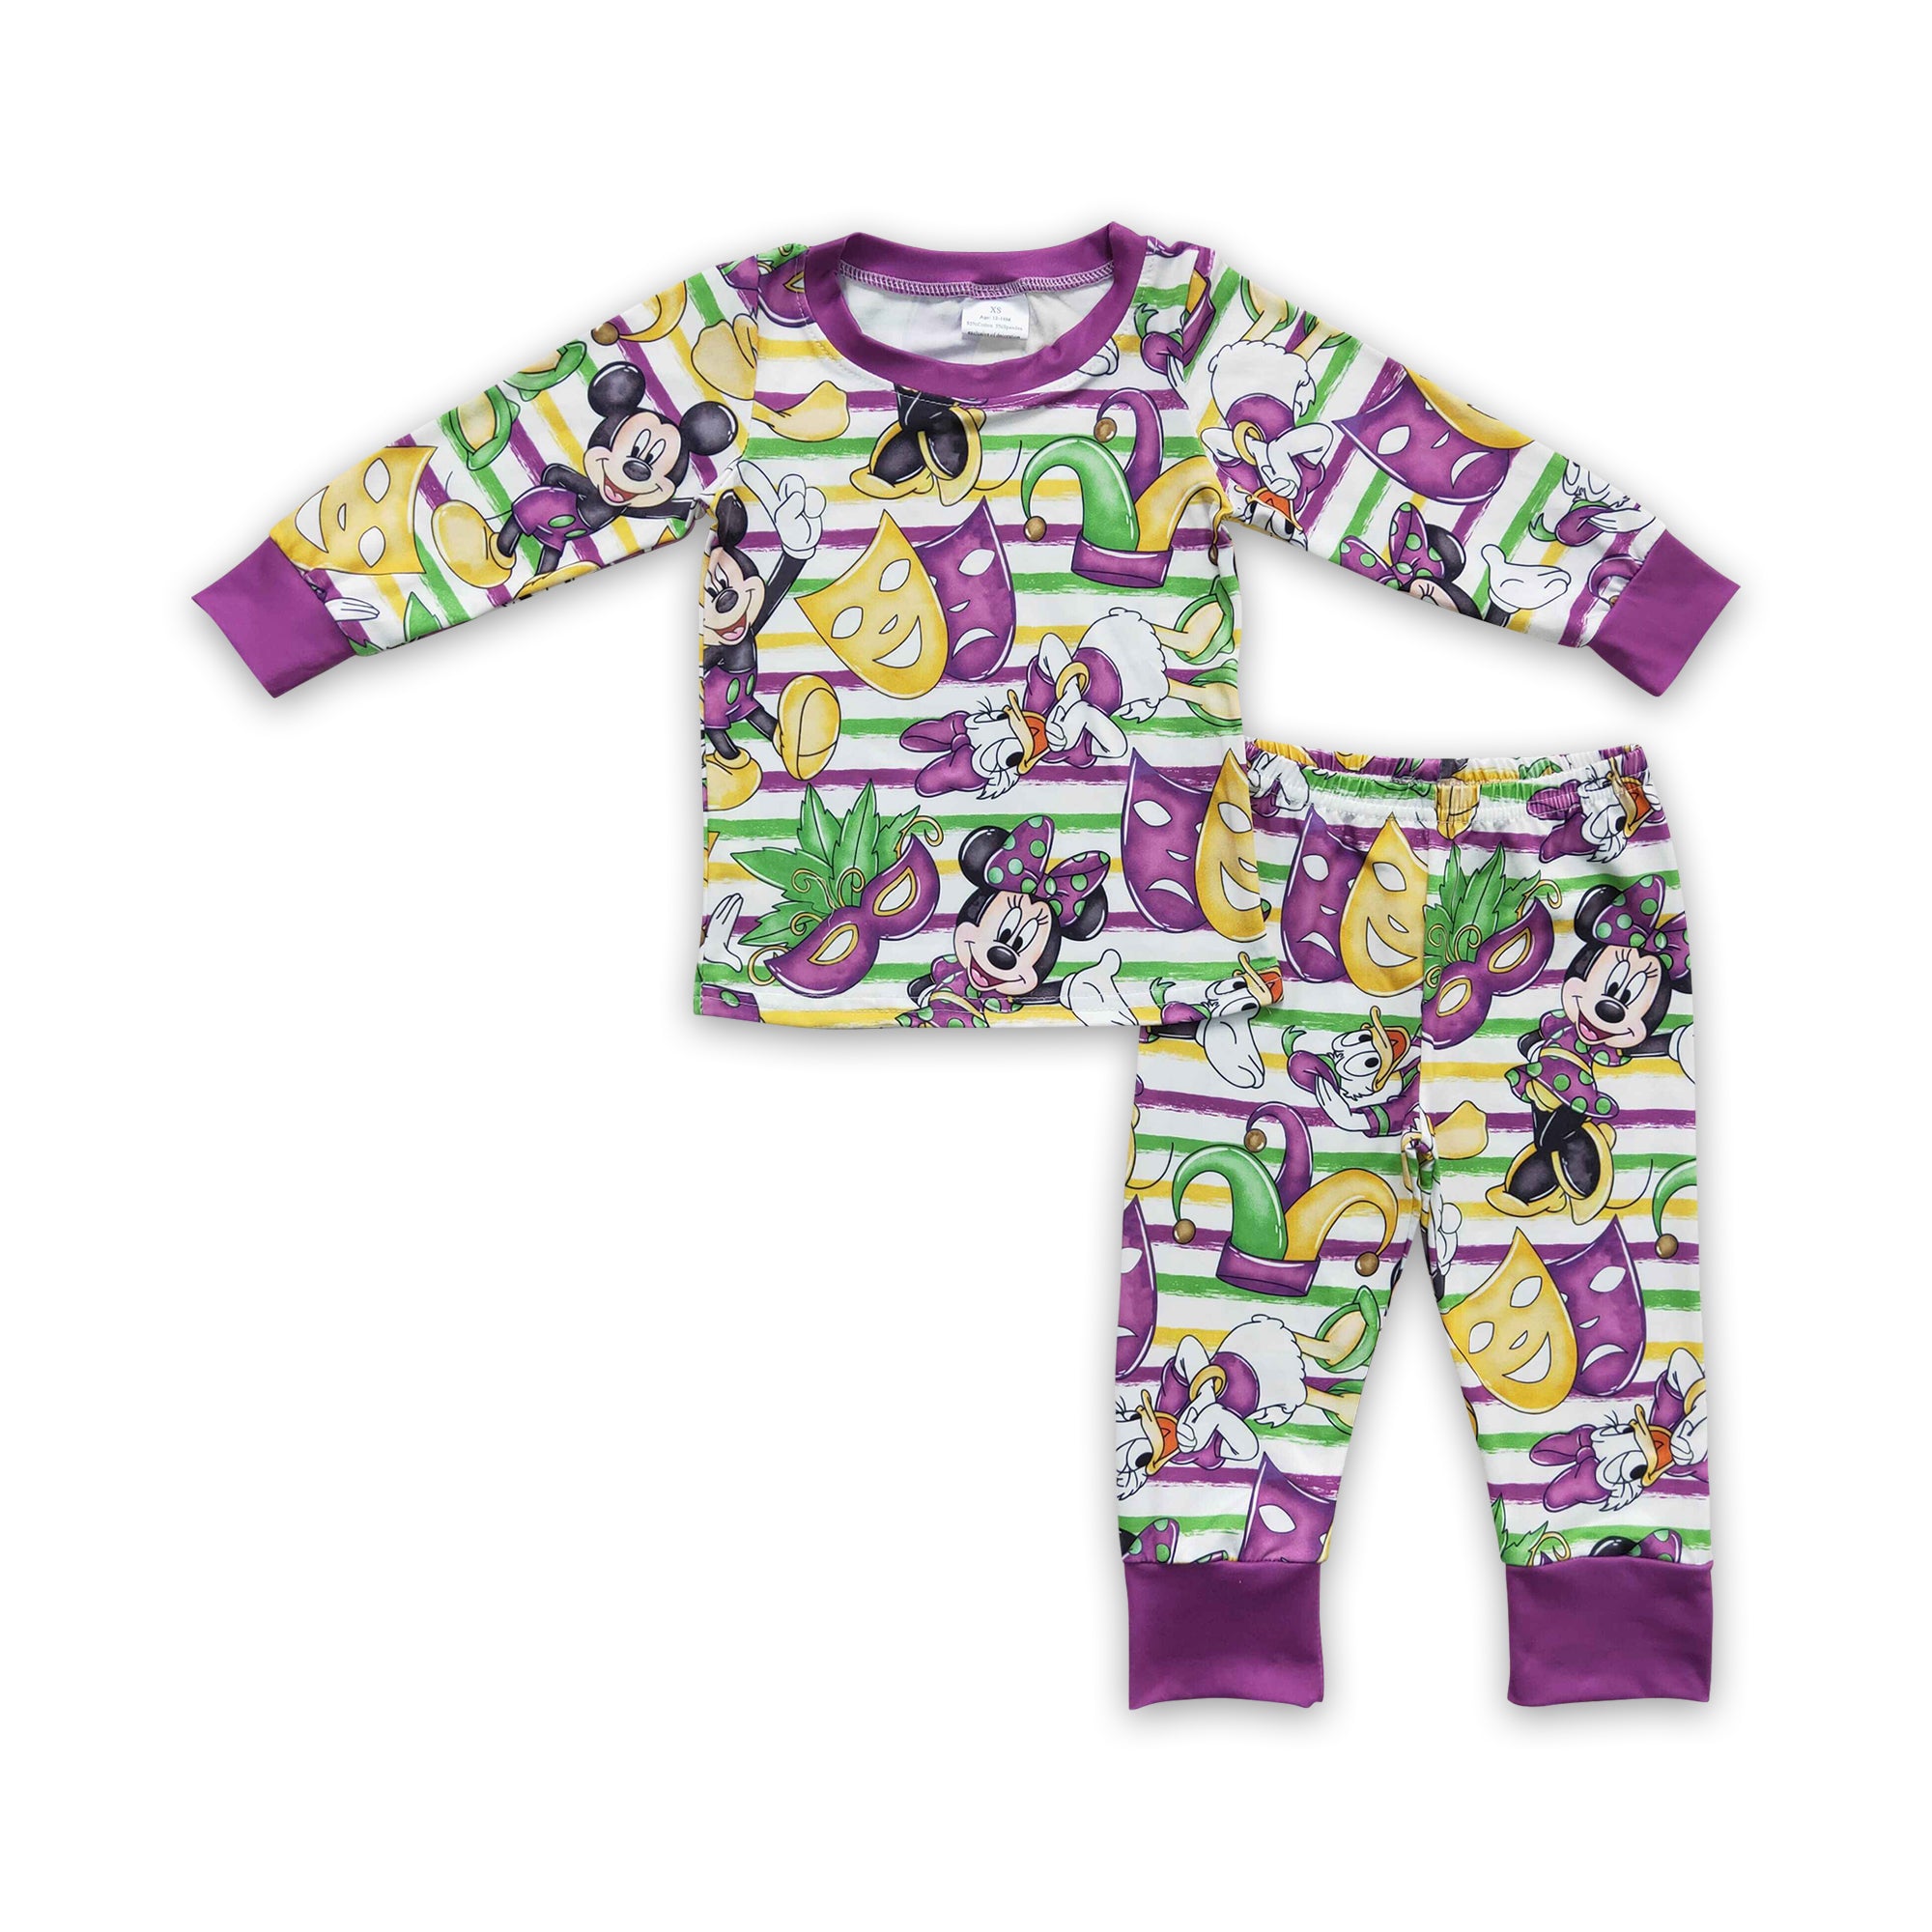 BLP0139 Mardi Gras baby boy clothes purple outfits